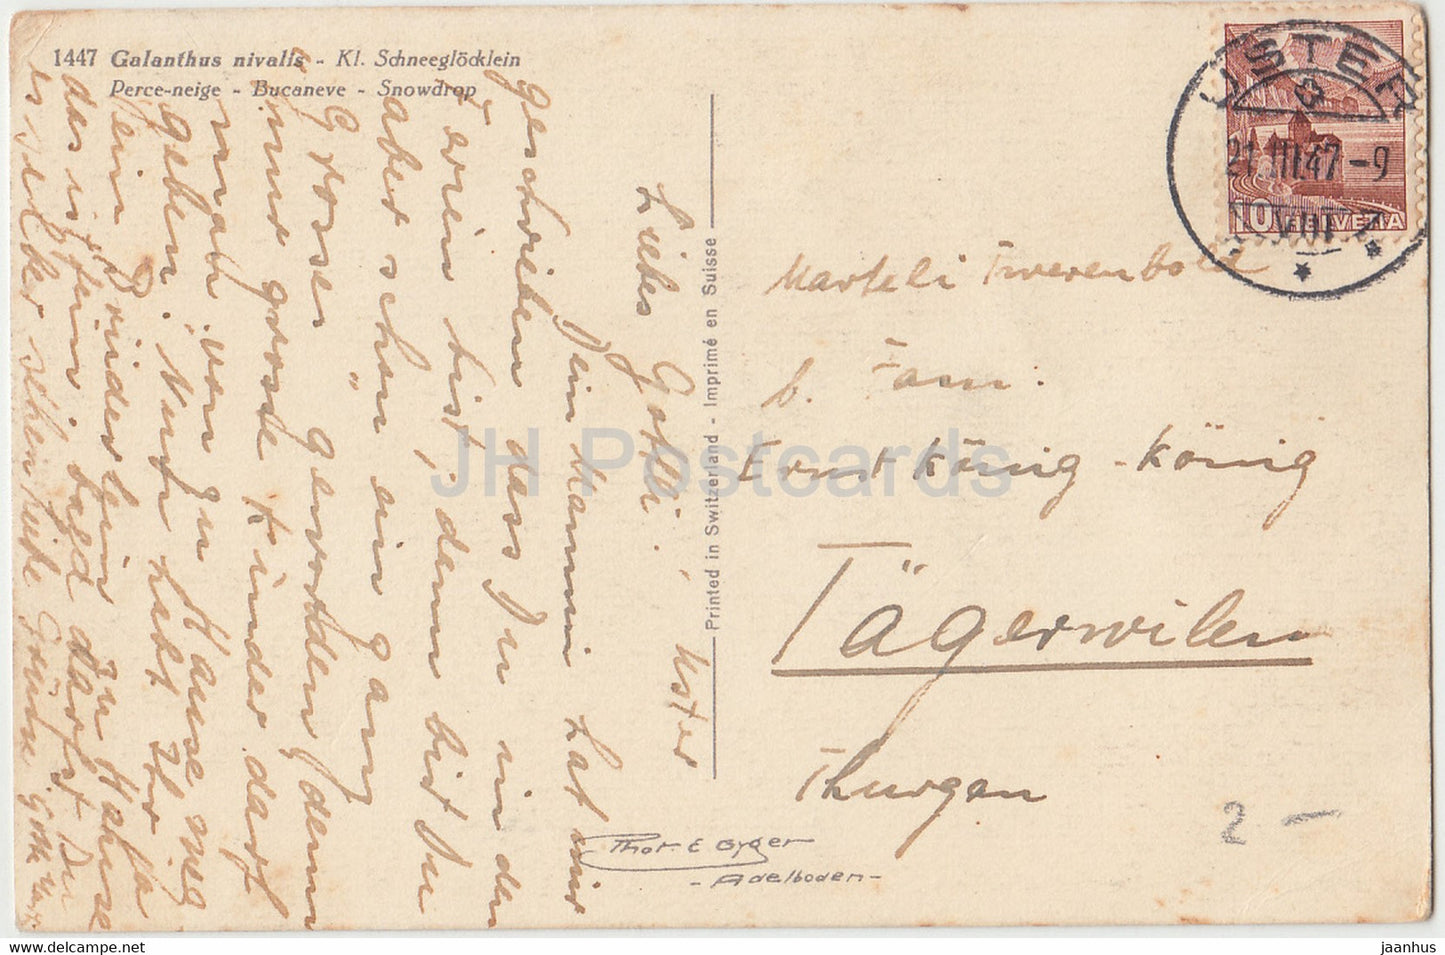 Galanthus Nivalis Kl Schneeglocklein - perce-neige - fleurs - 1447 - carte postale ancienne - 1947 - Suisse - utilisé